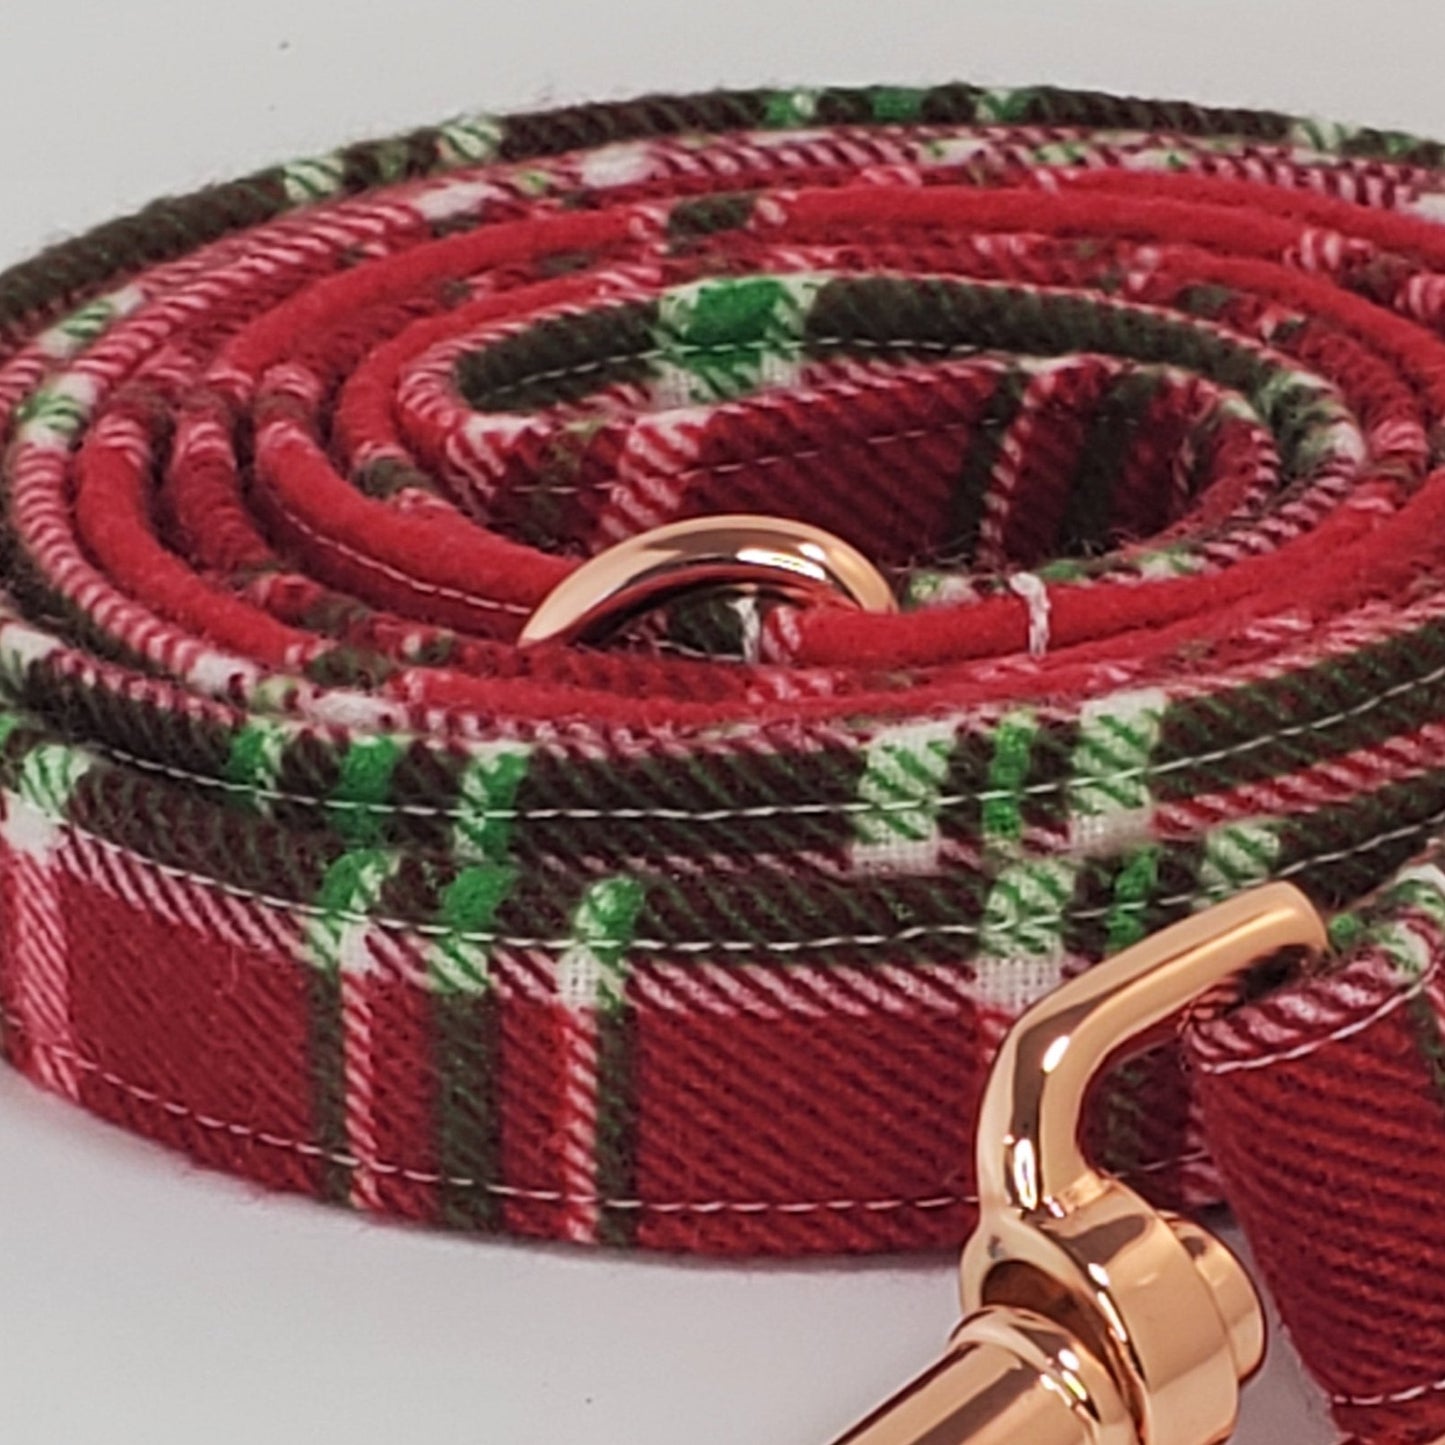 Traditional Red Super Snuggle Fabric Dog Leash